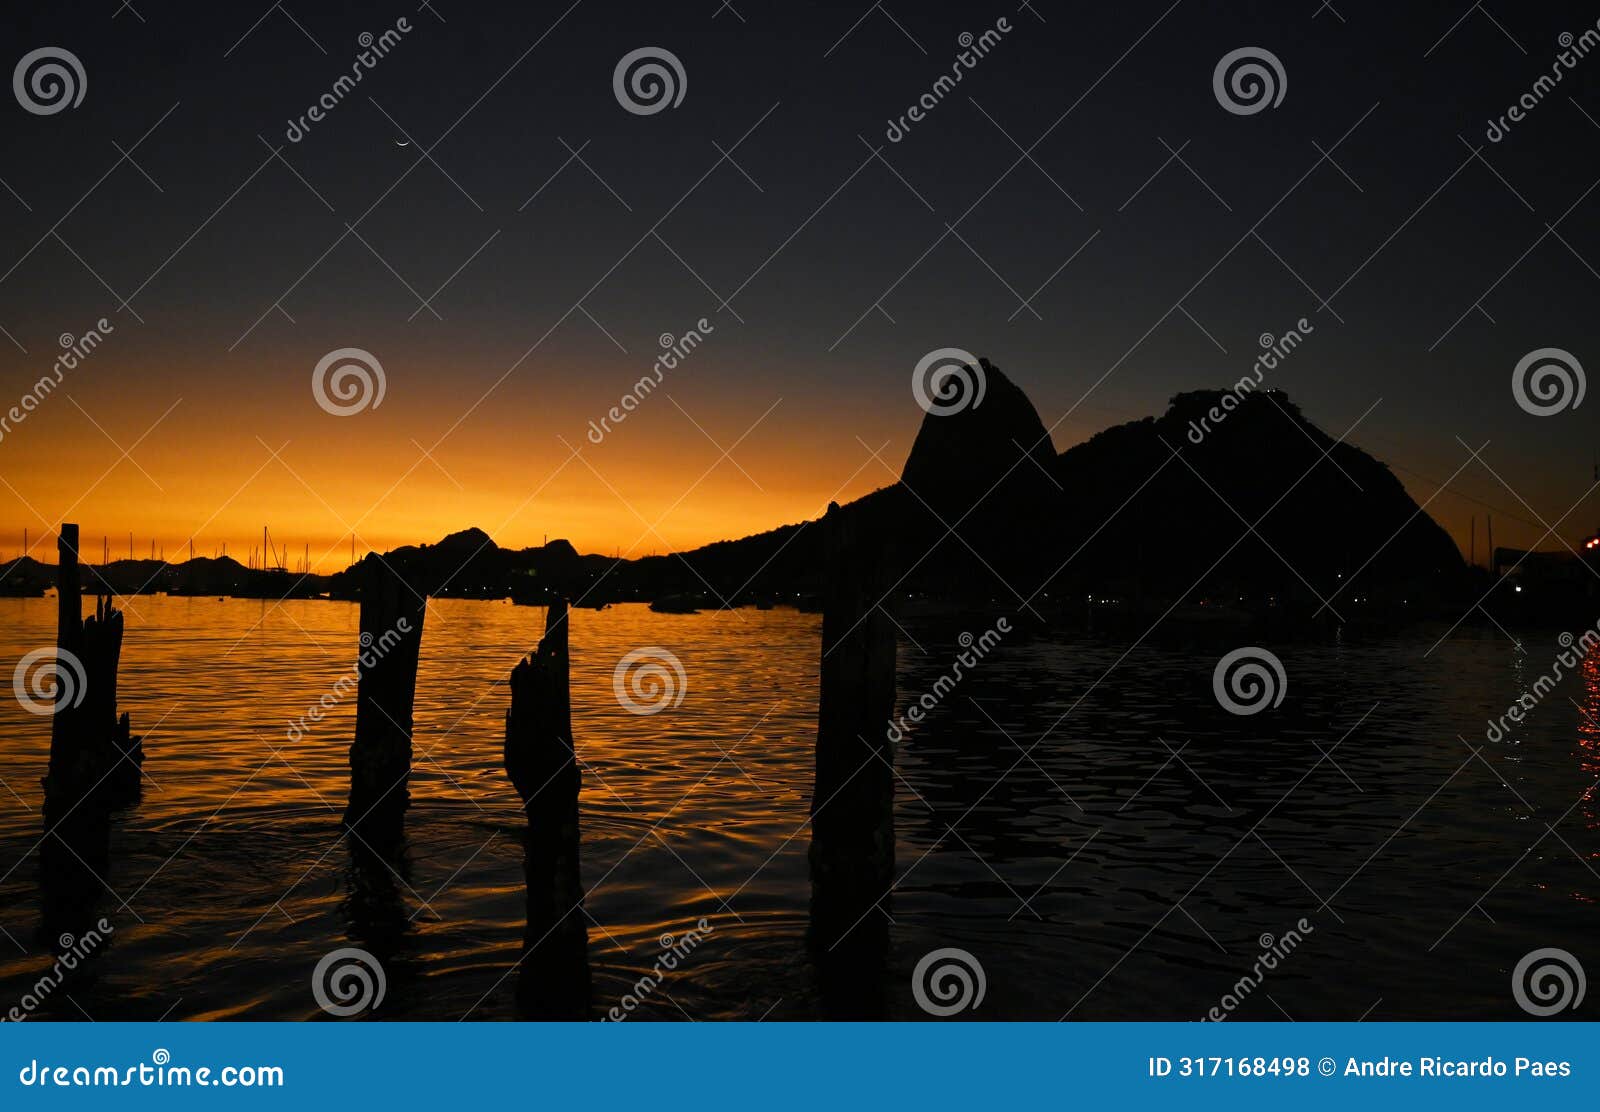 sunrise on botafogo beach next to sugarloaf mountain, traditional postcard of brazil